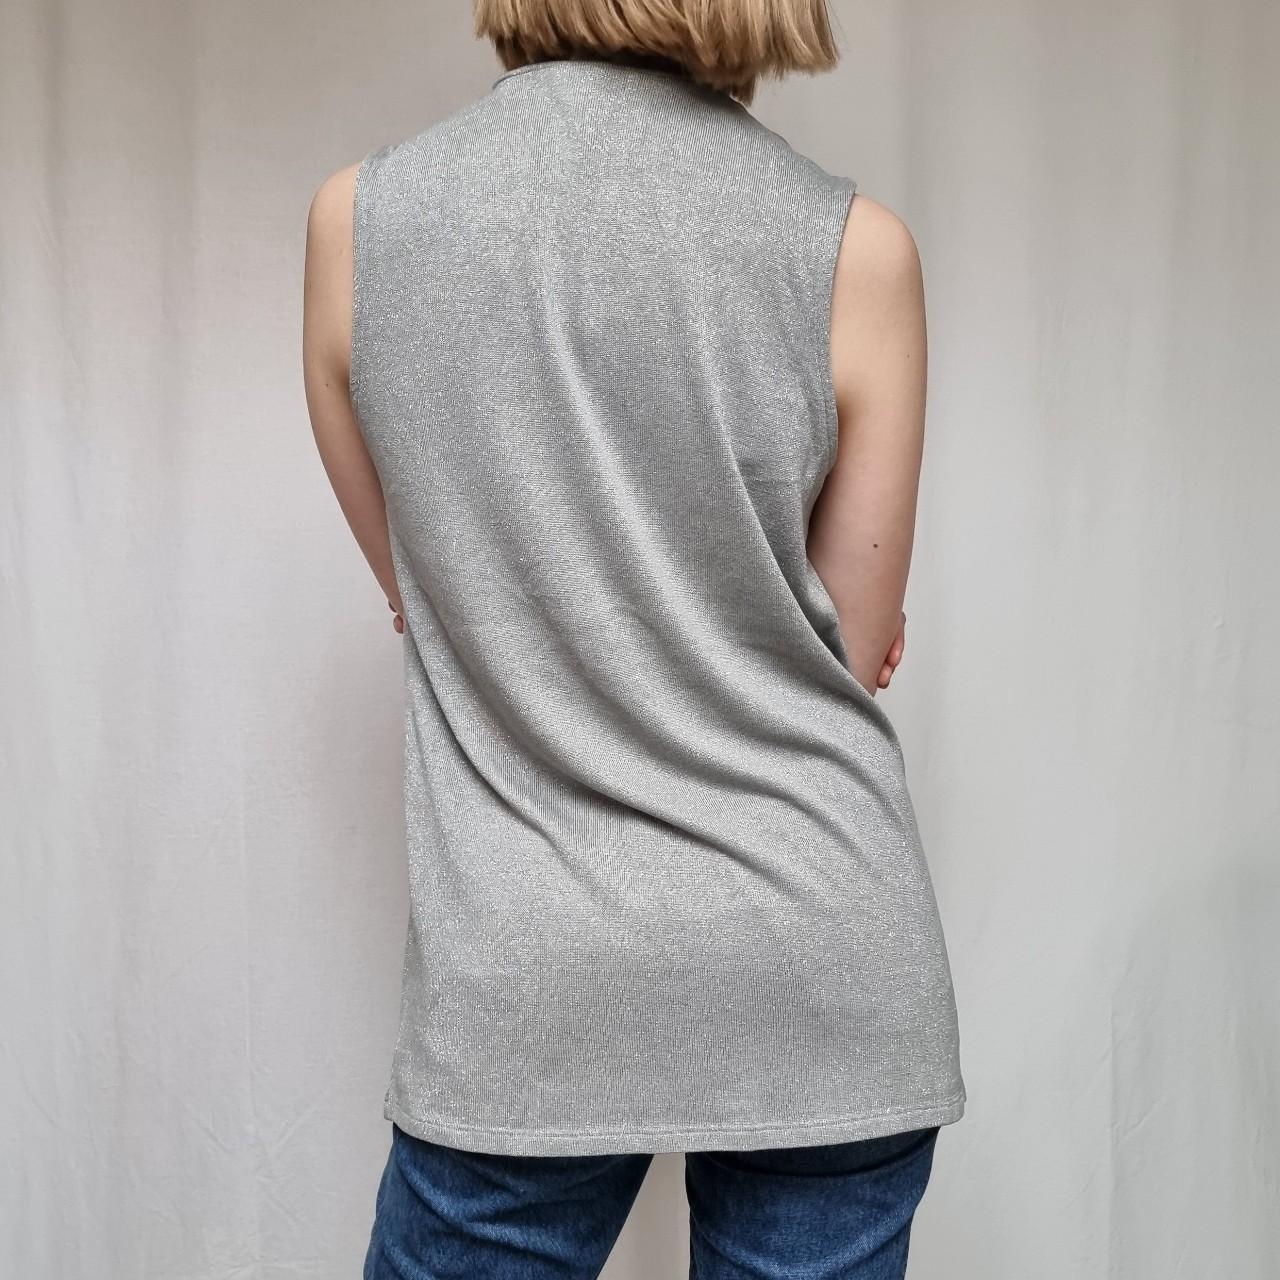 Metallic Grey/Silver Longline Vest Make a... - Depop